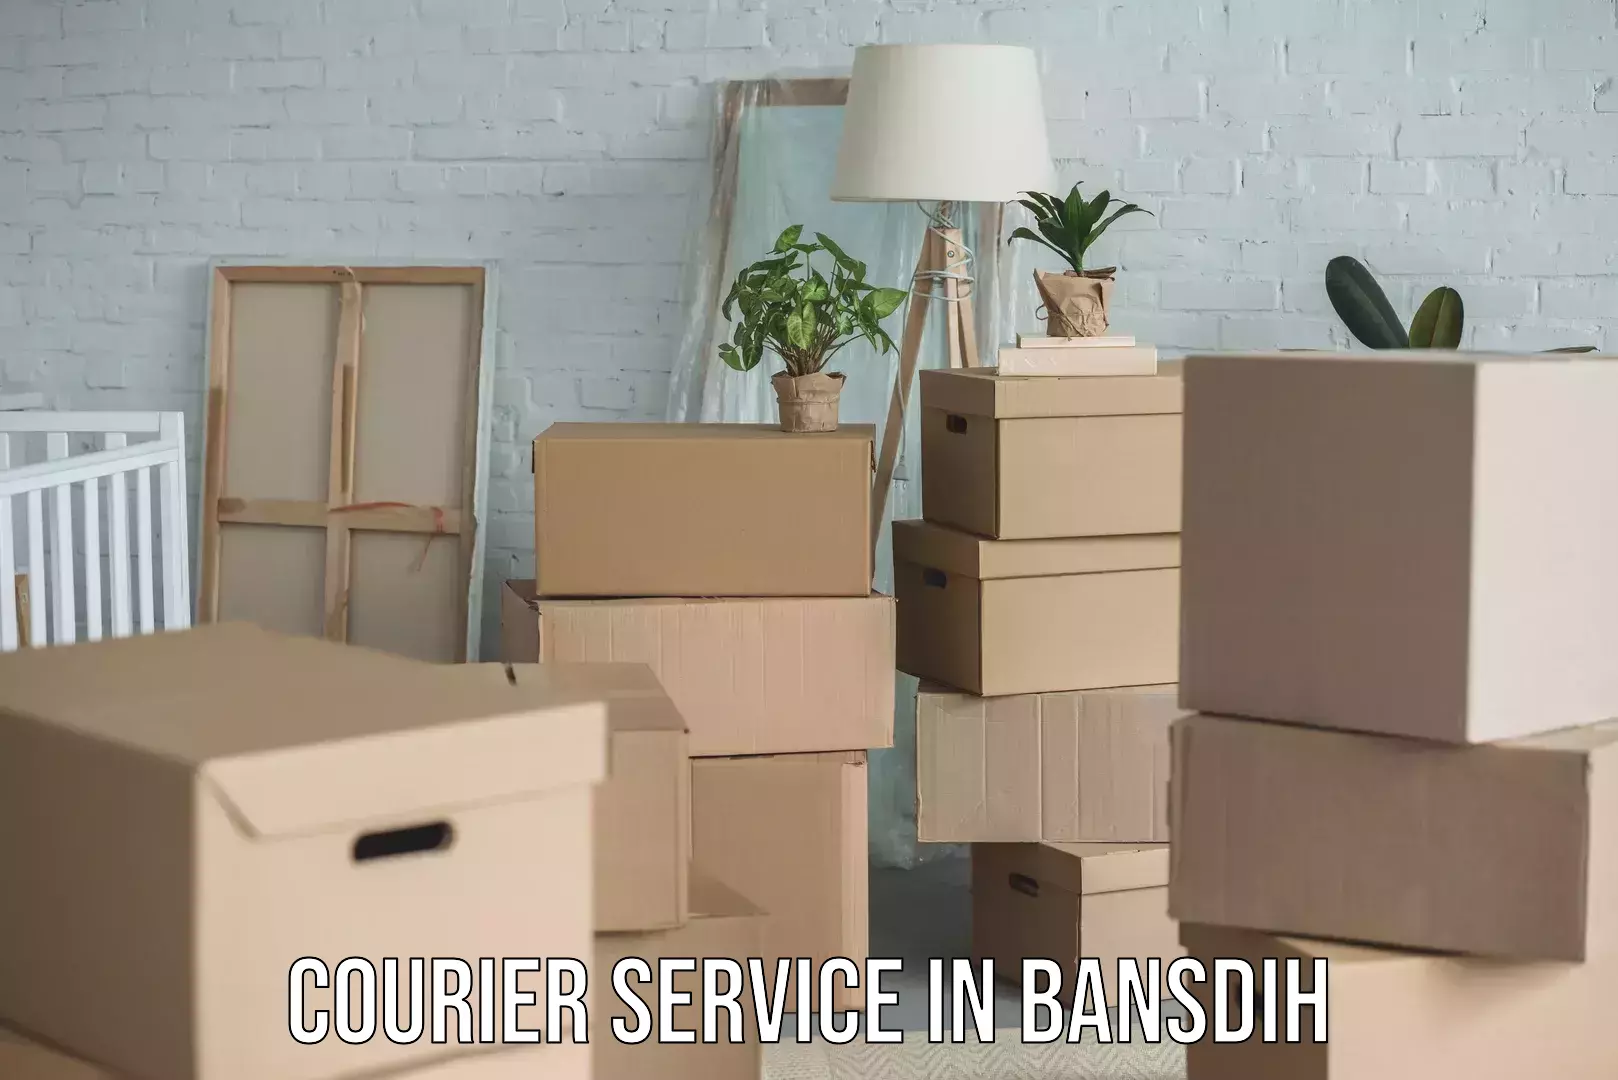 High-capacity shipping options in Bansdih